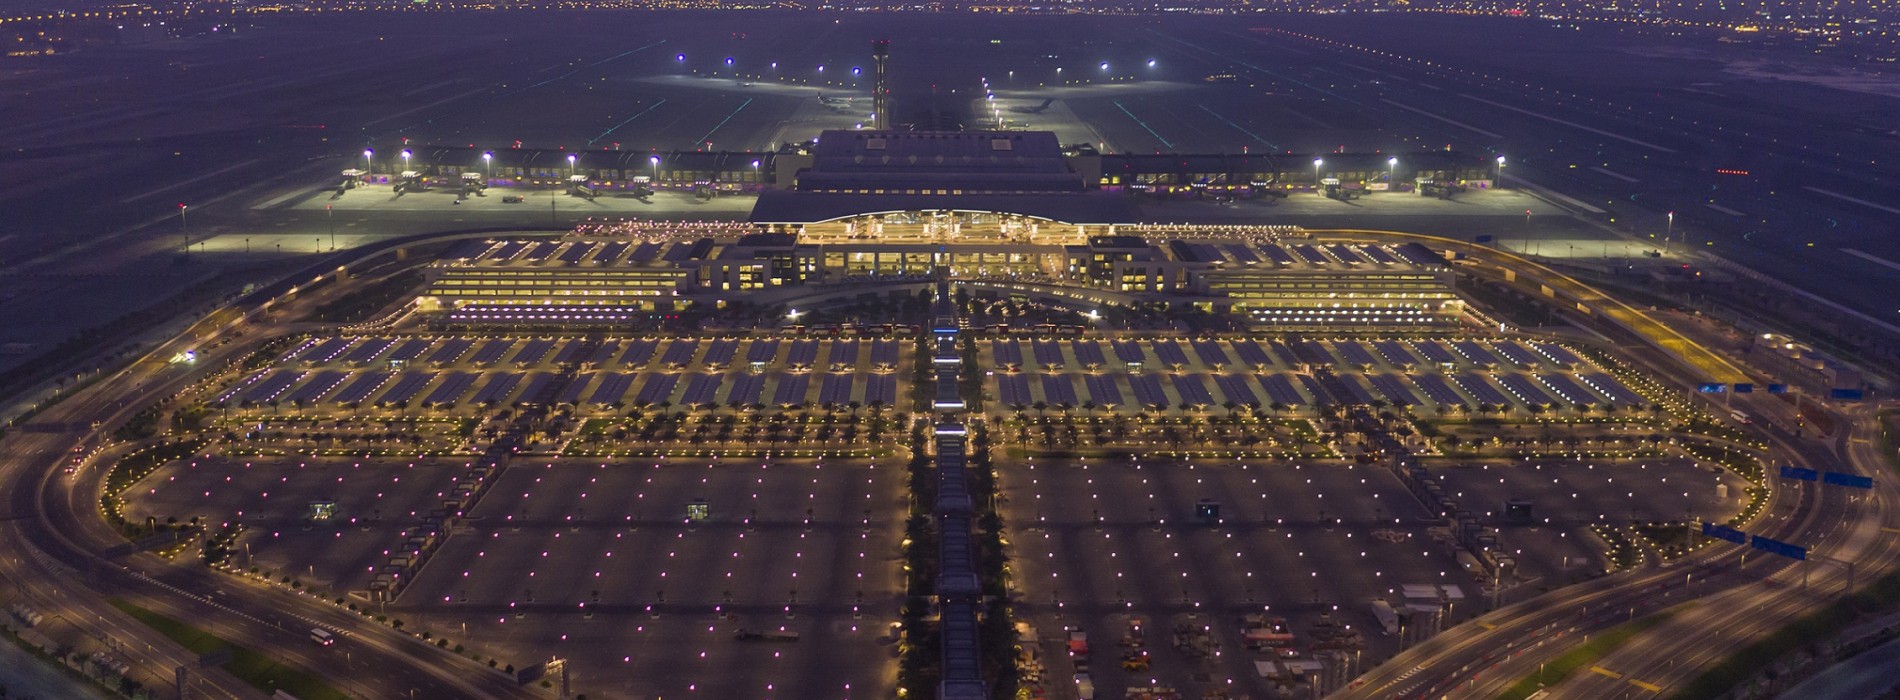 Oman gets a stylish new gateway ‘The Muscat International Airport’